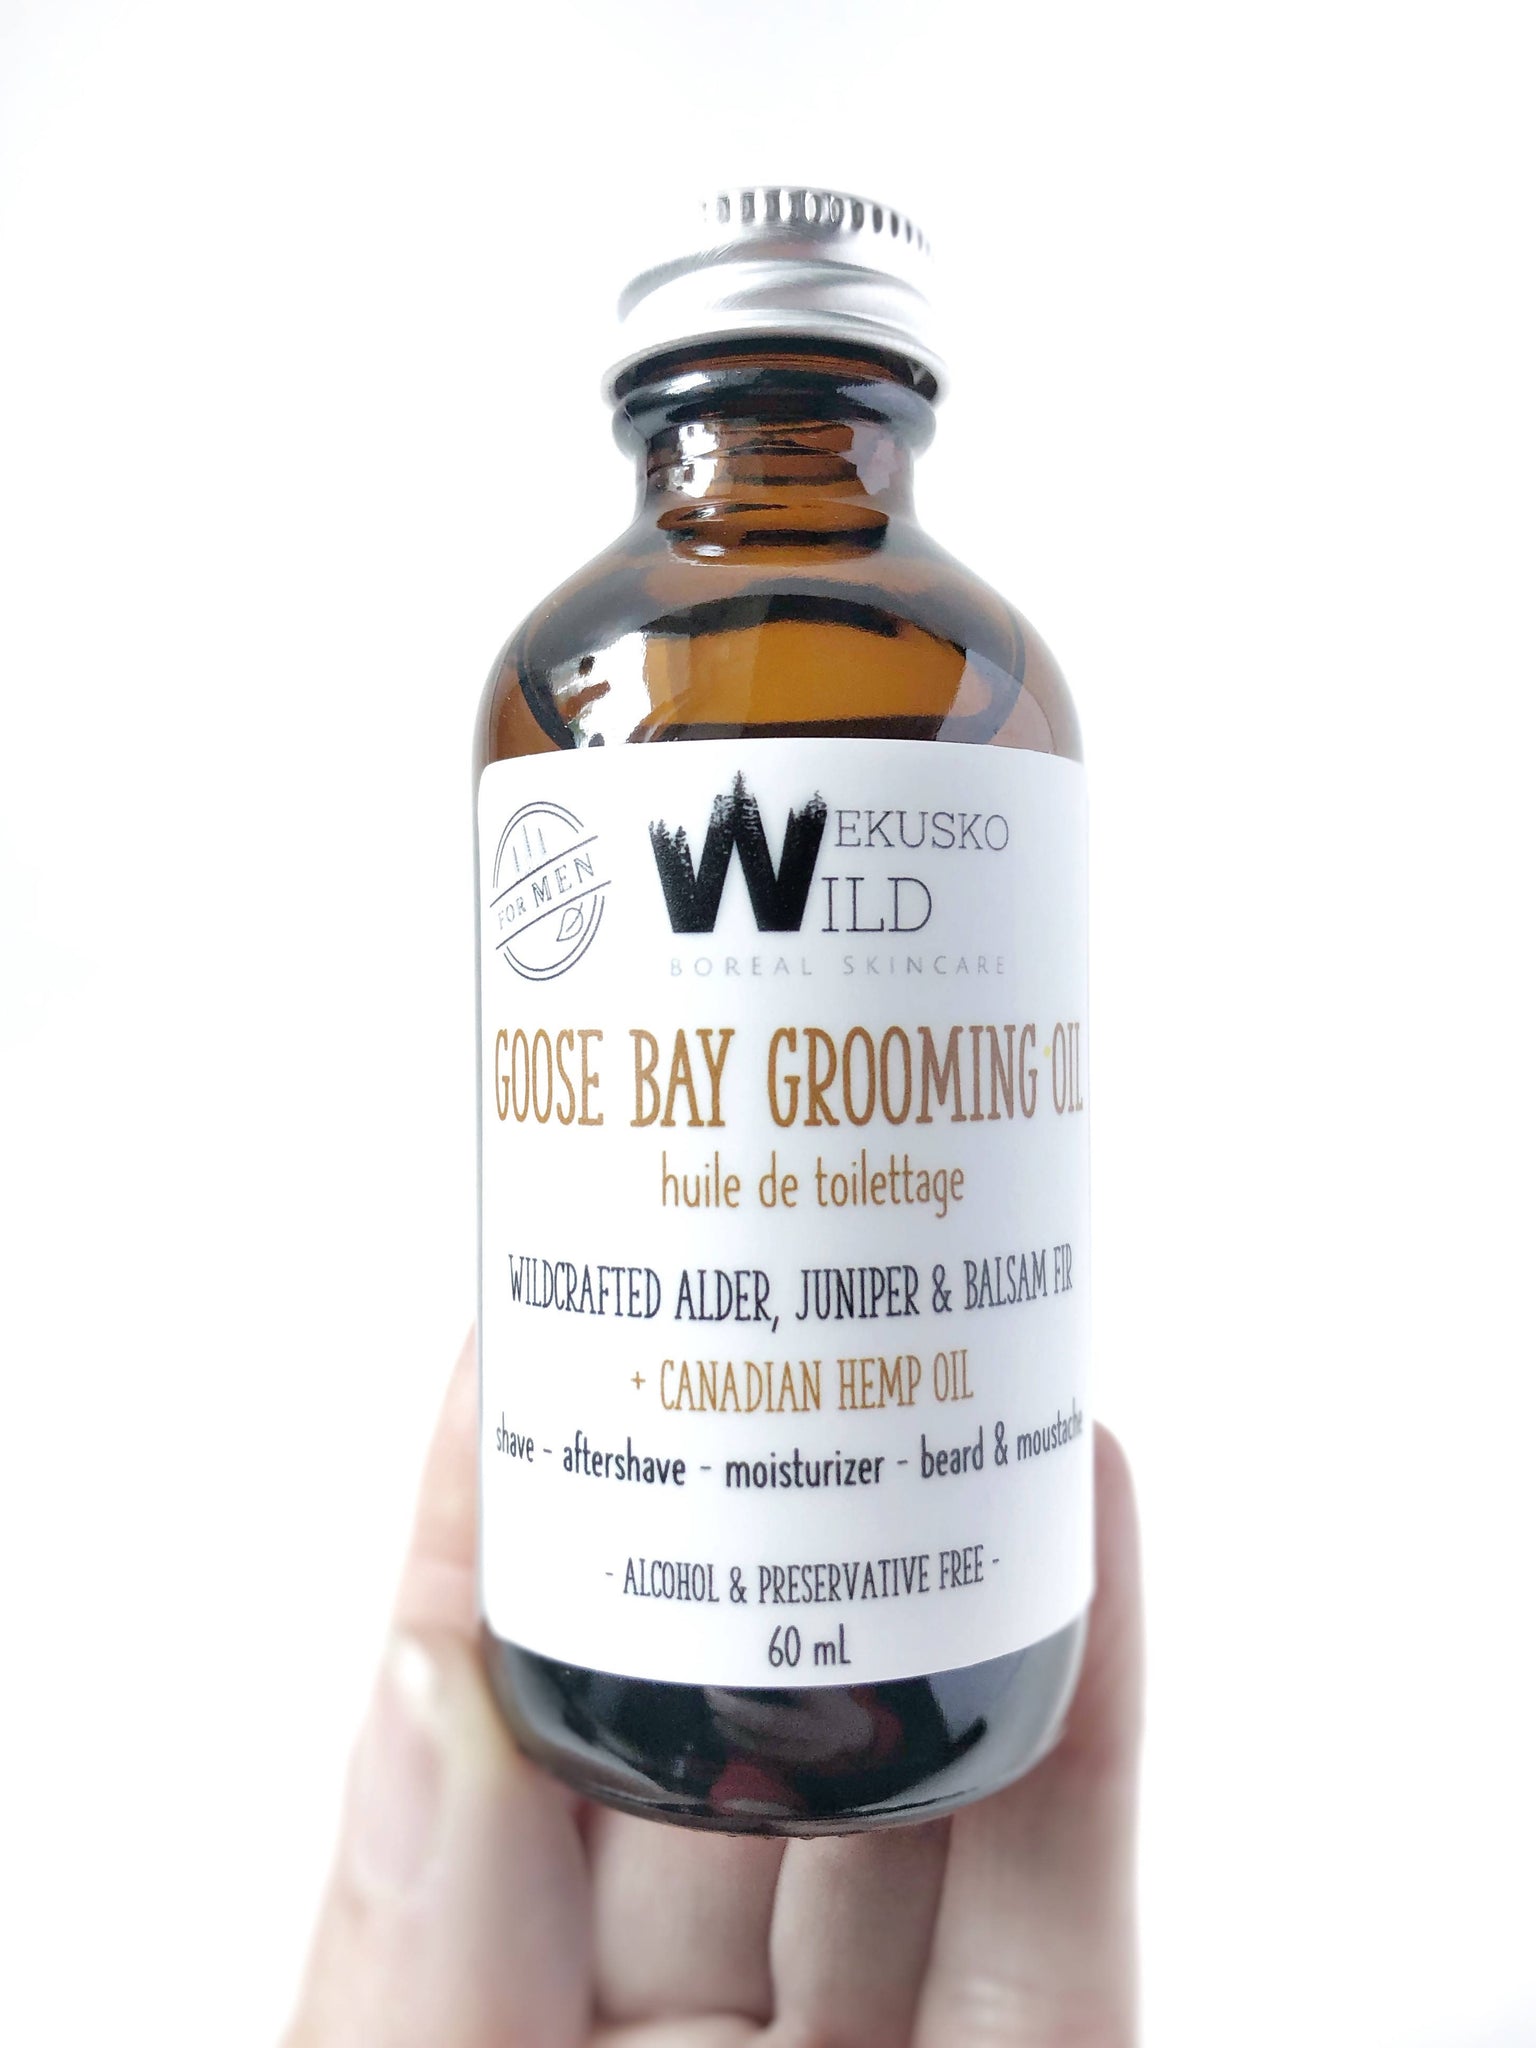 Goose Bay grooming oil - WEKUSKO WILD boreal skincare